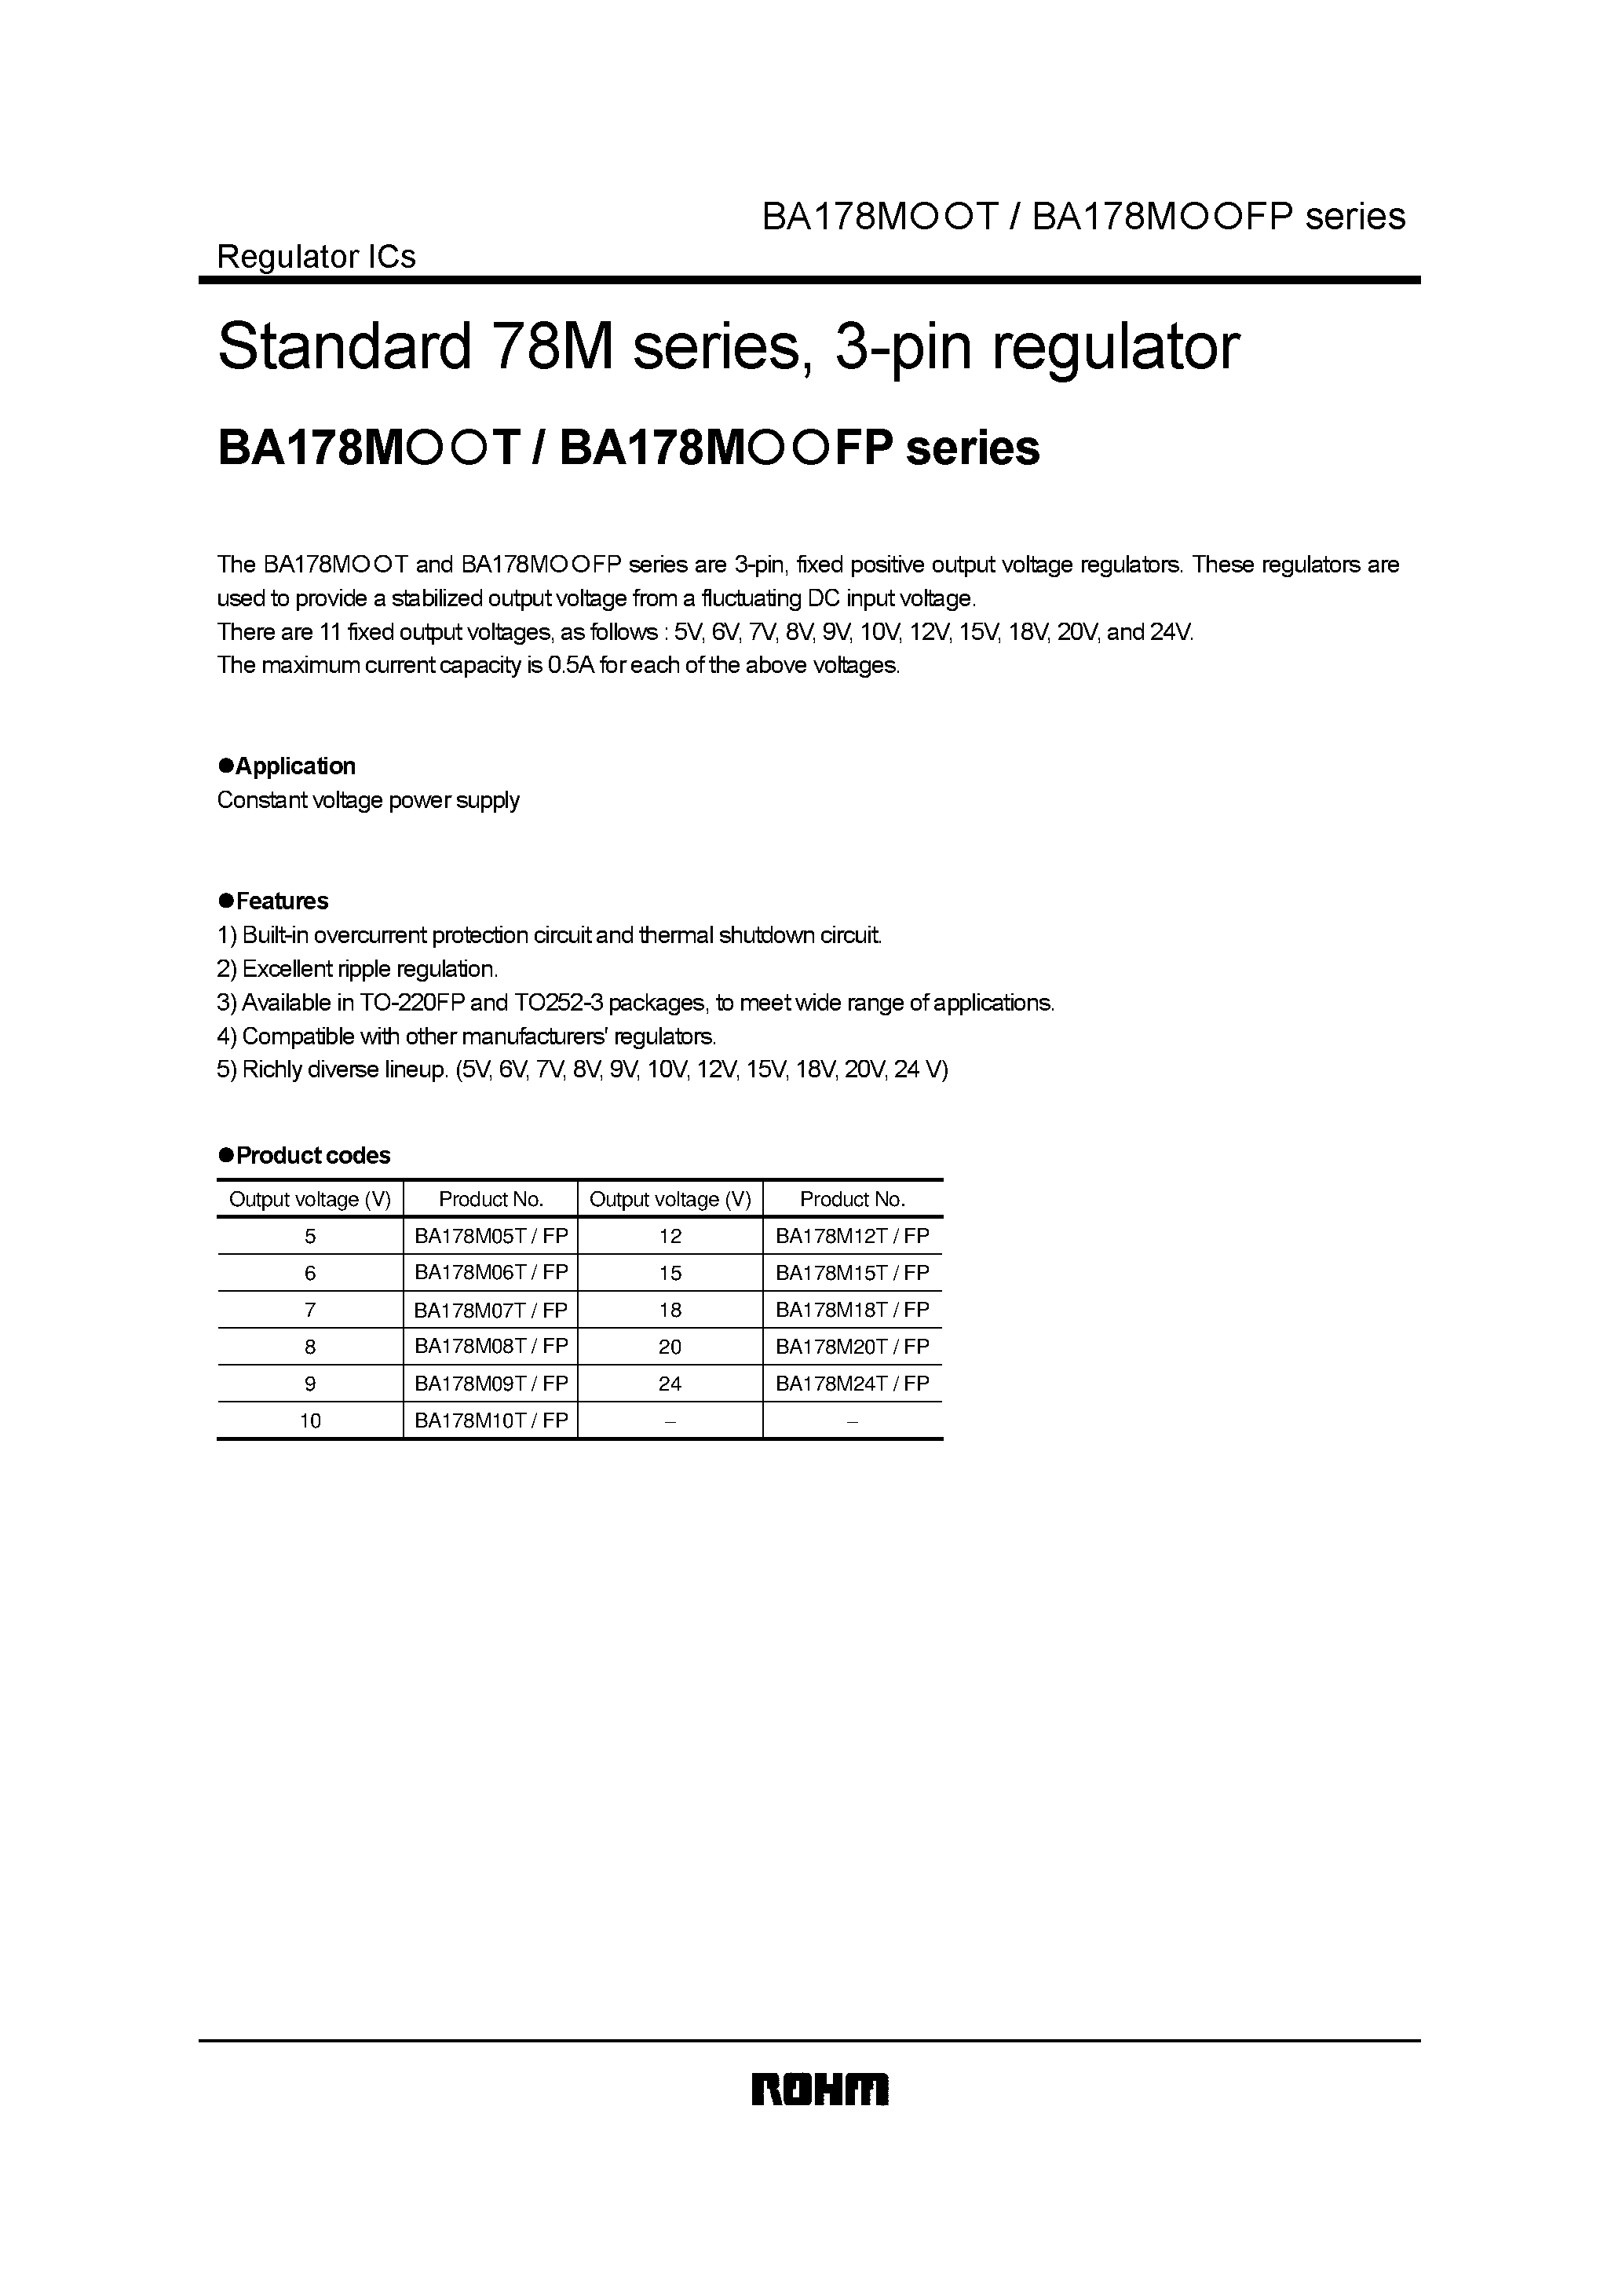 Даташит BA178M06FP - Standard 78M series/ 3-pin regulator страница 1